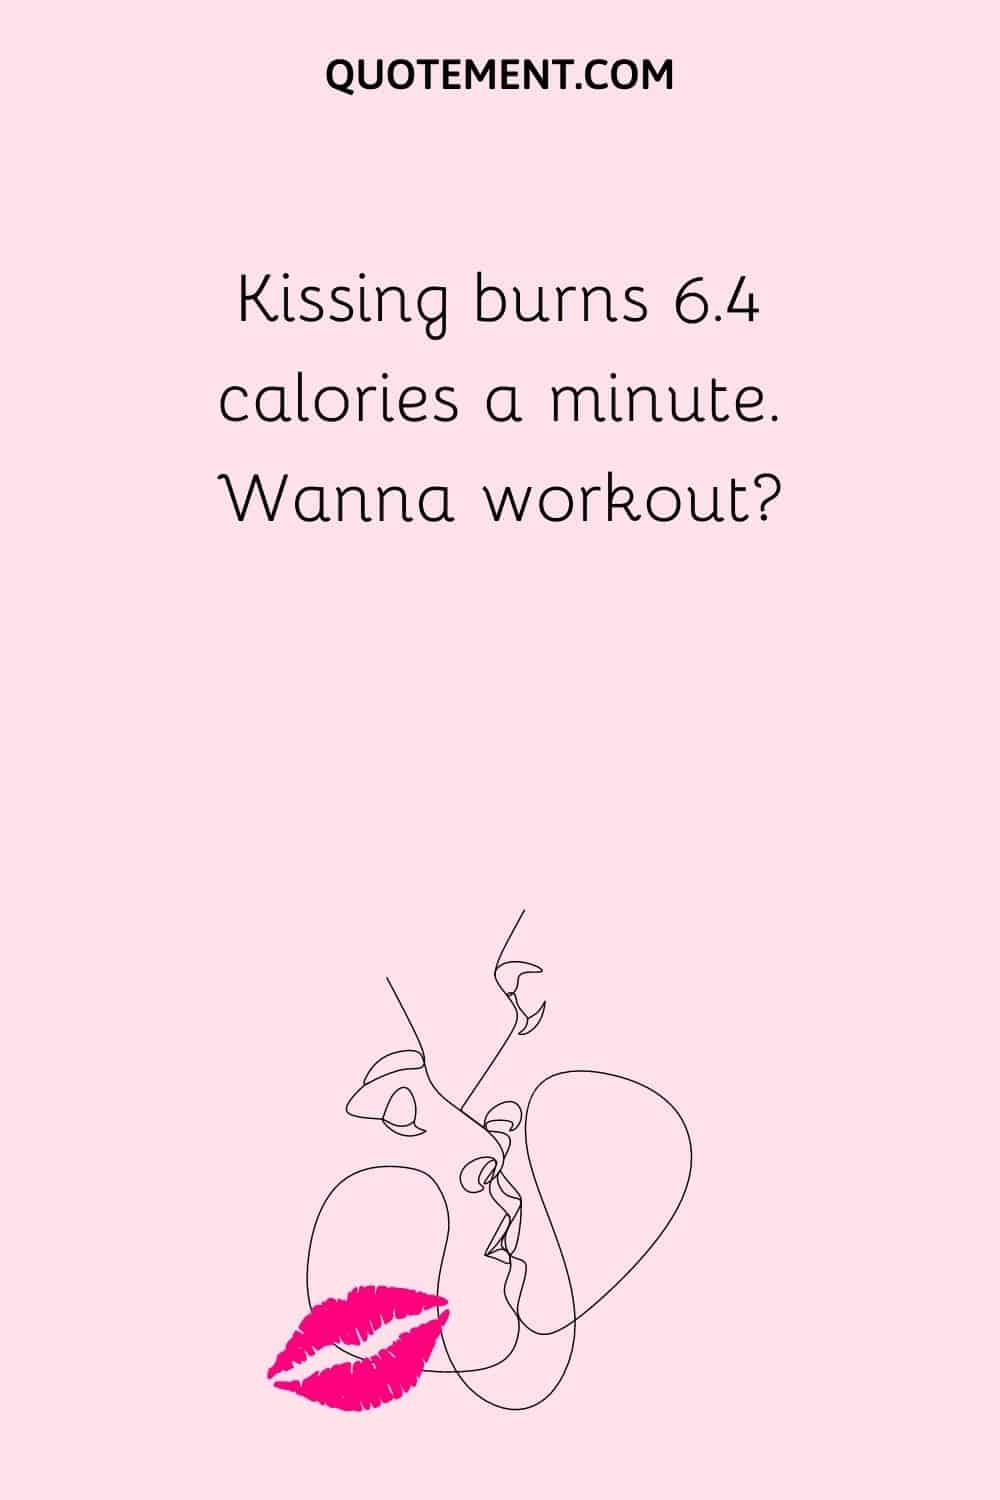 Kissing burns 6.4 calories a minute